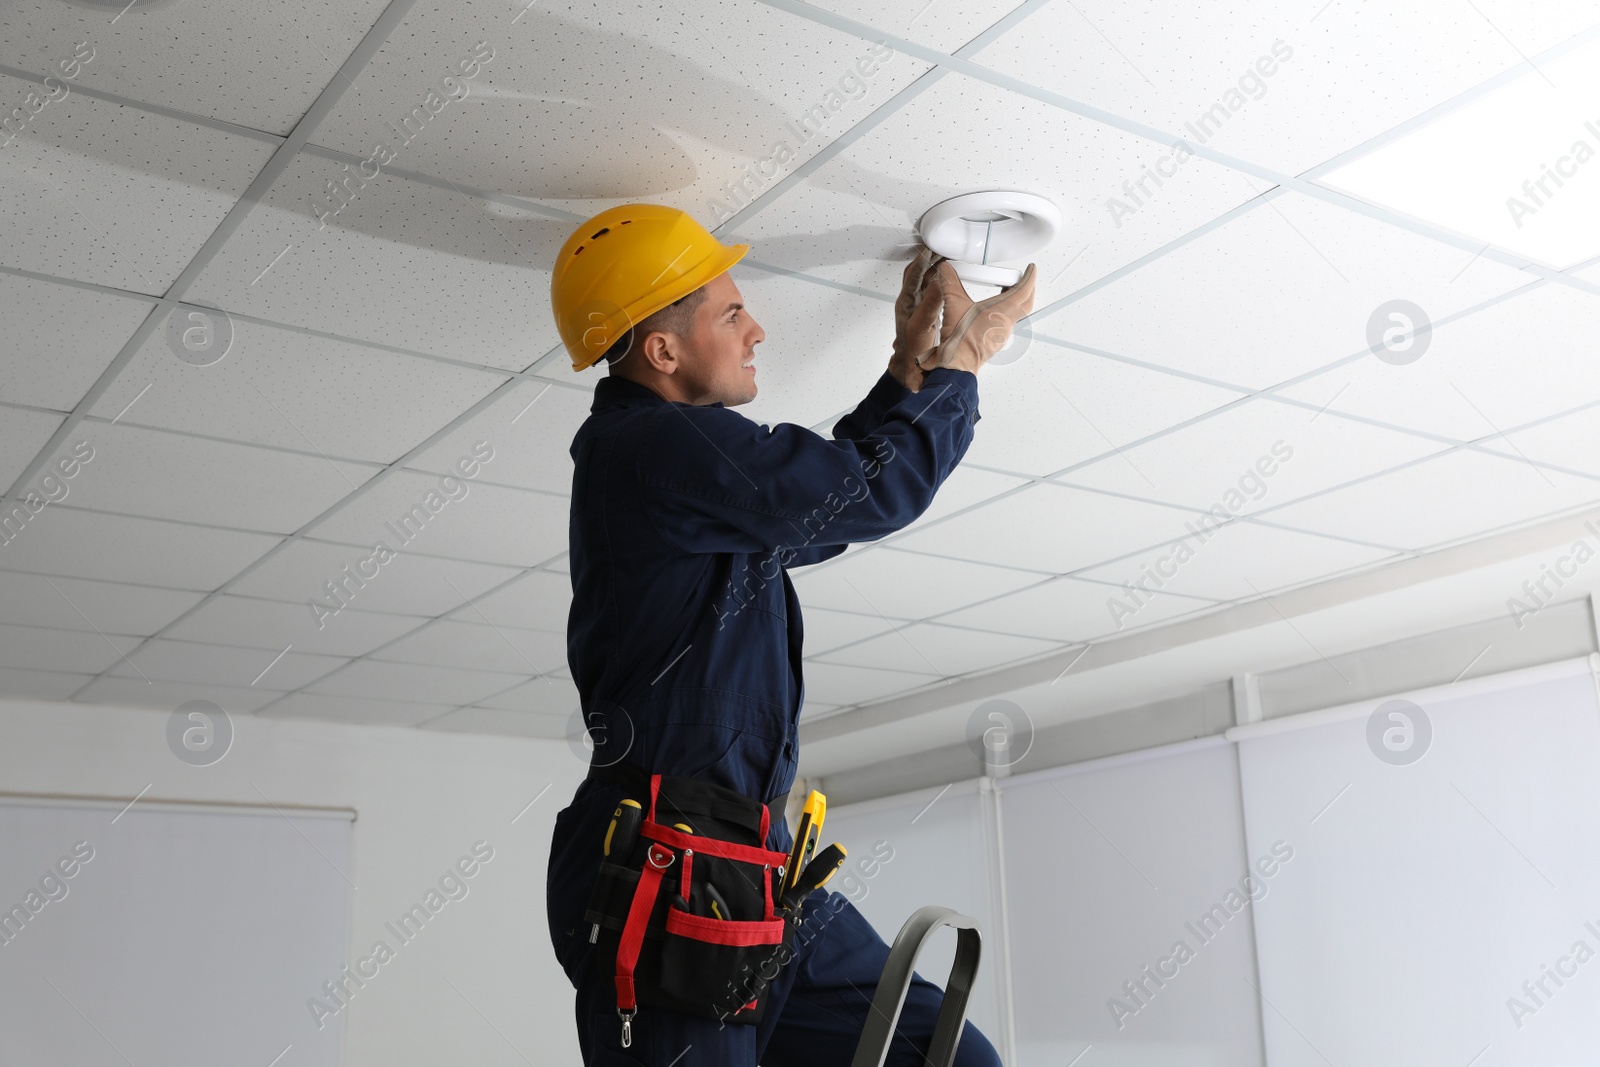 Photo of Electrician in uniform repairing ceiling lamp indoors